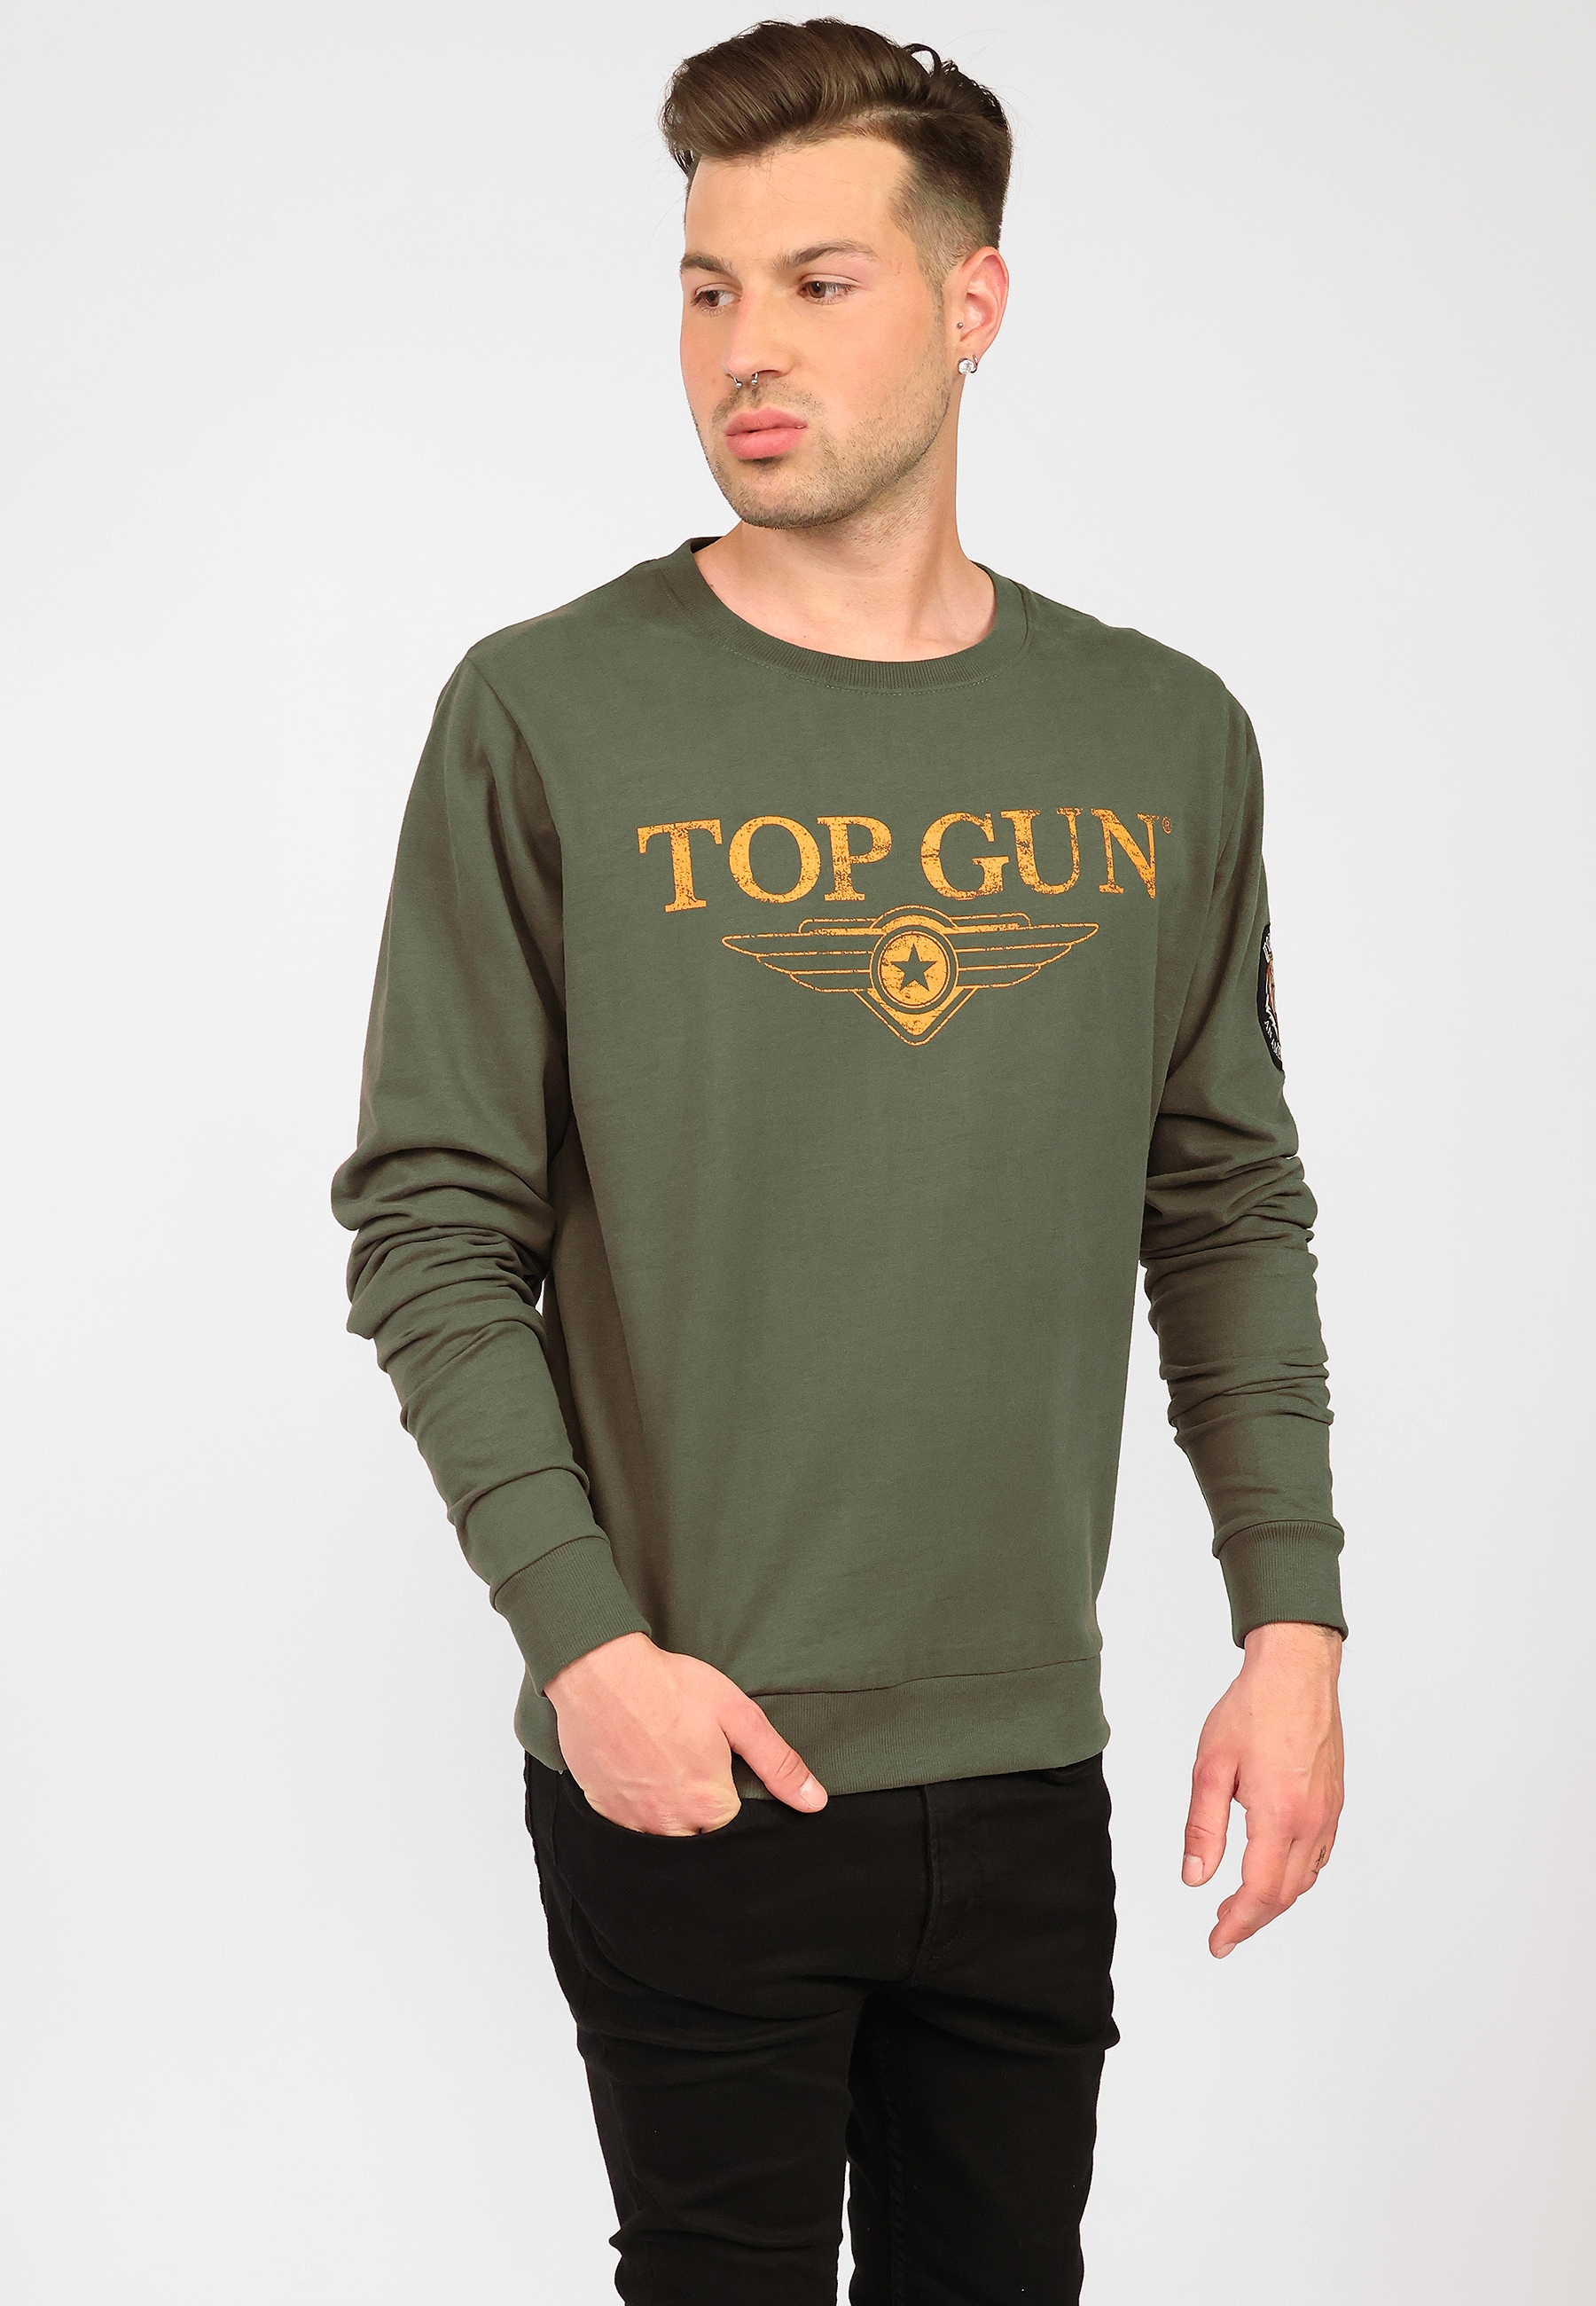 Black Friday TOP »TG20213005« GUN BAUR | Sweater